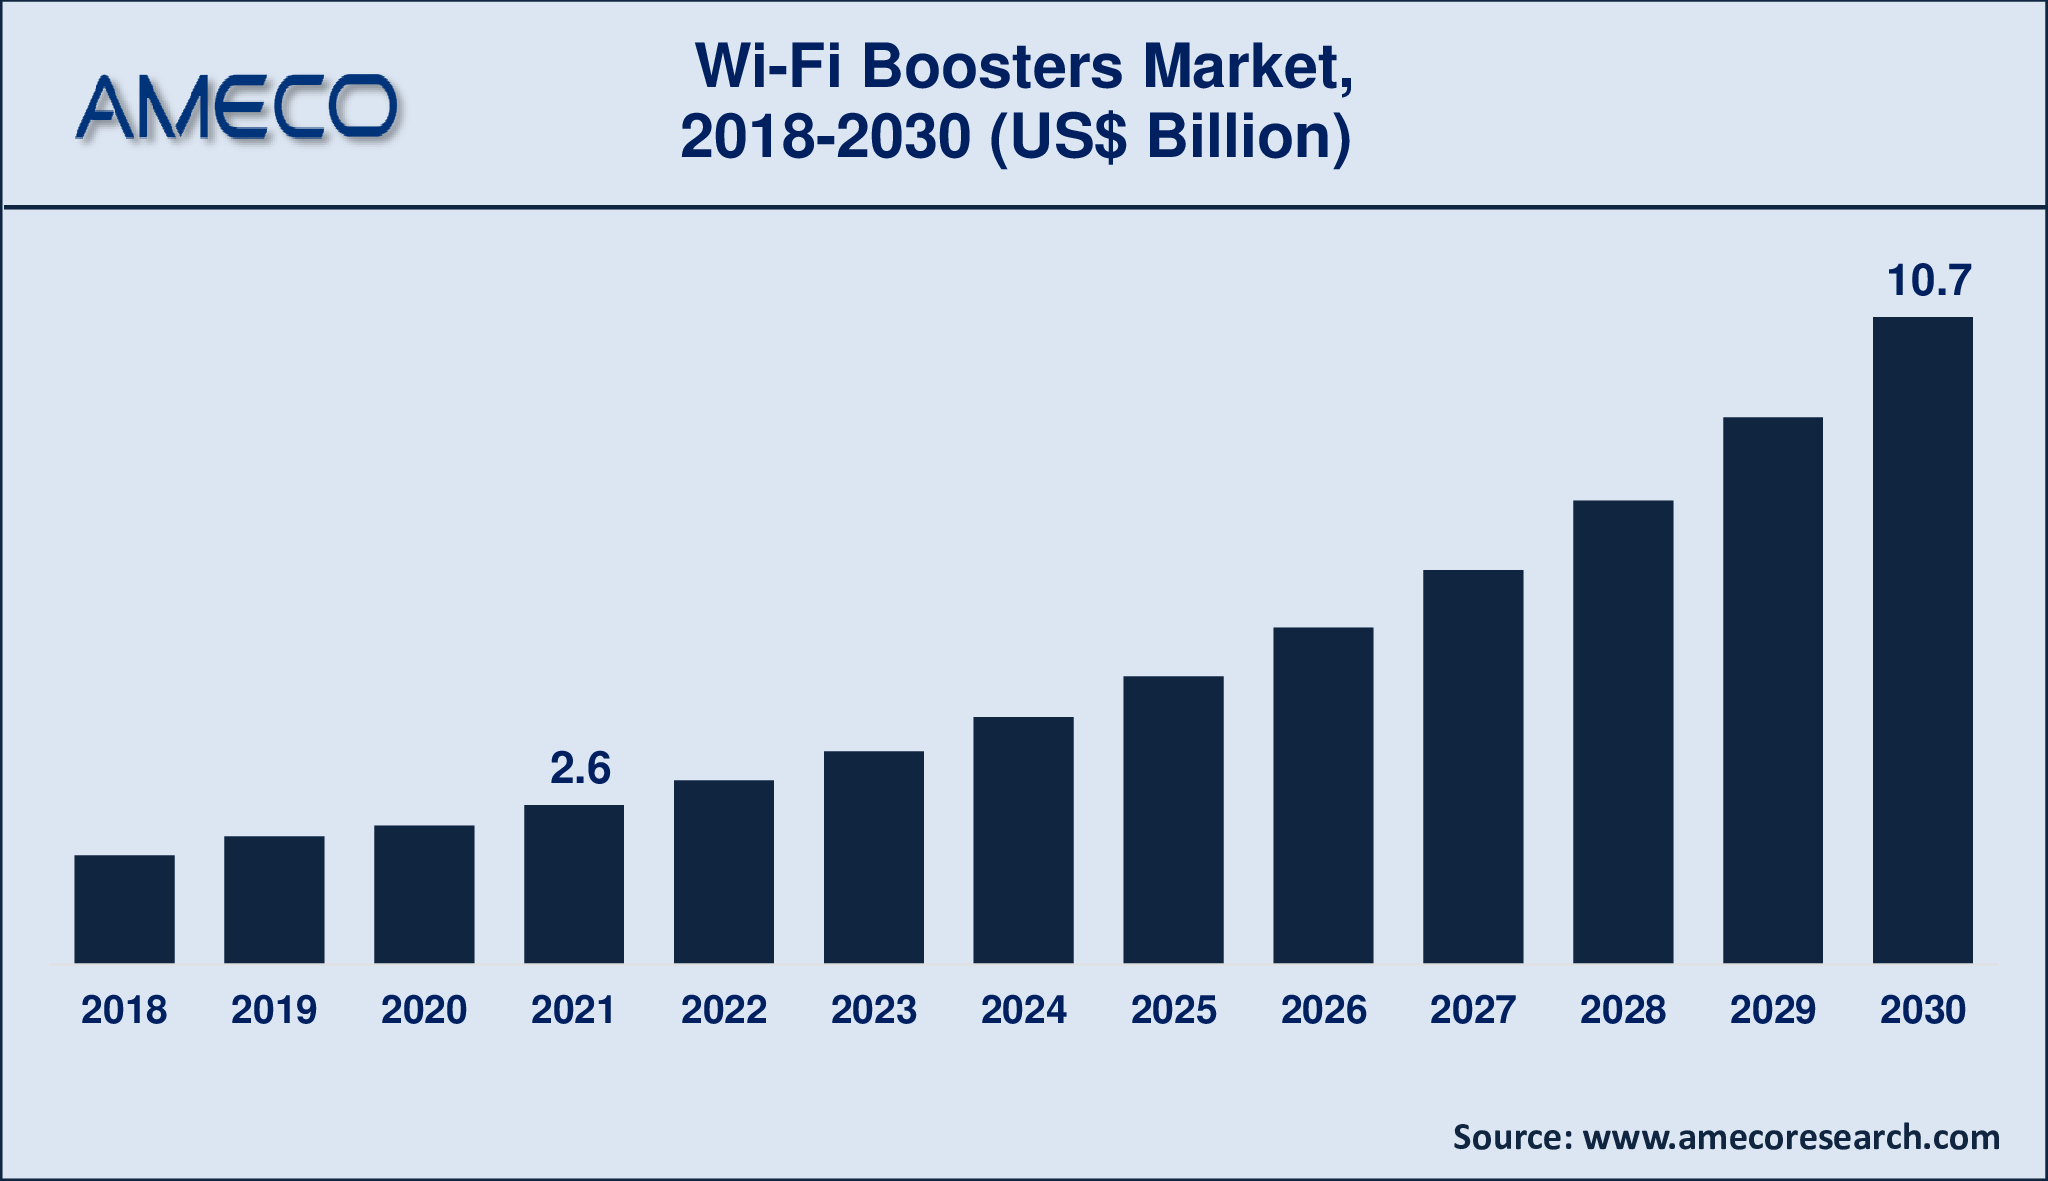 Wi-Fi Boosters Market Size